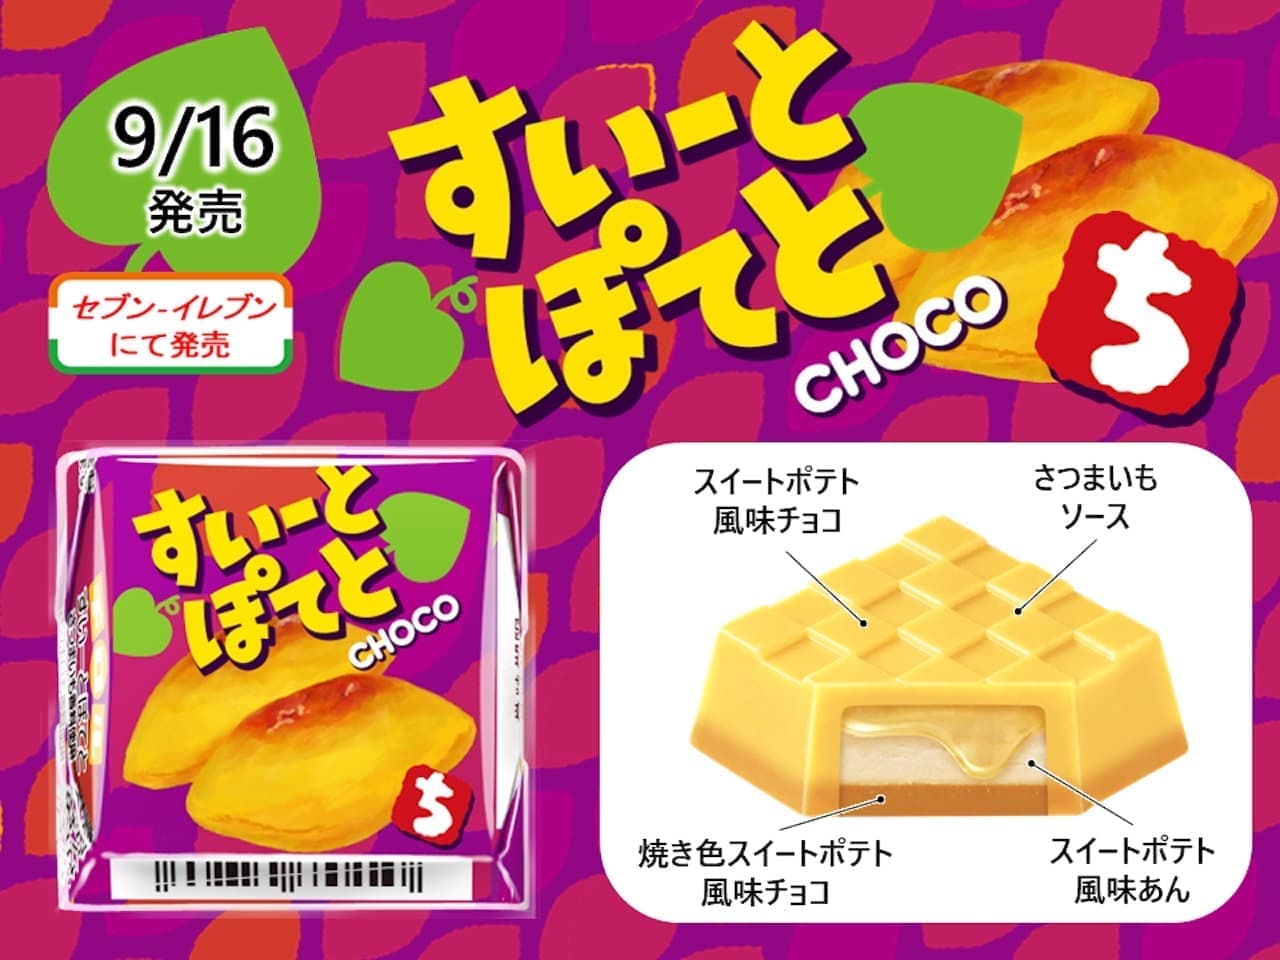 7-ELEVEN "Chirole Chocolates (Suito Potato)